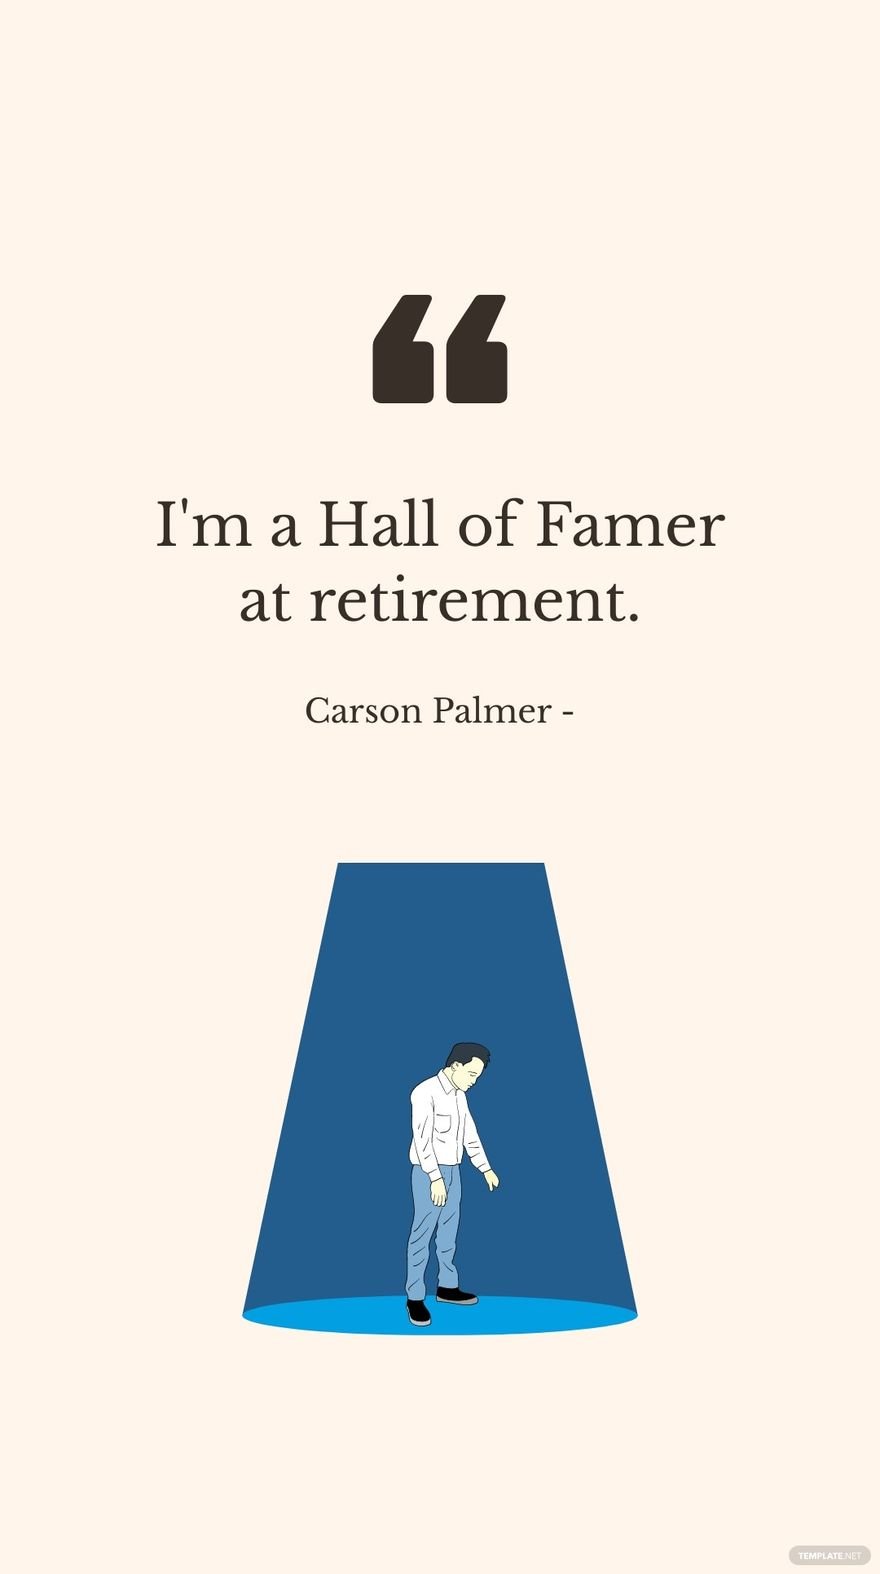 Carson Palmer - I'm a Hall of Famer at retirement.